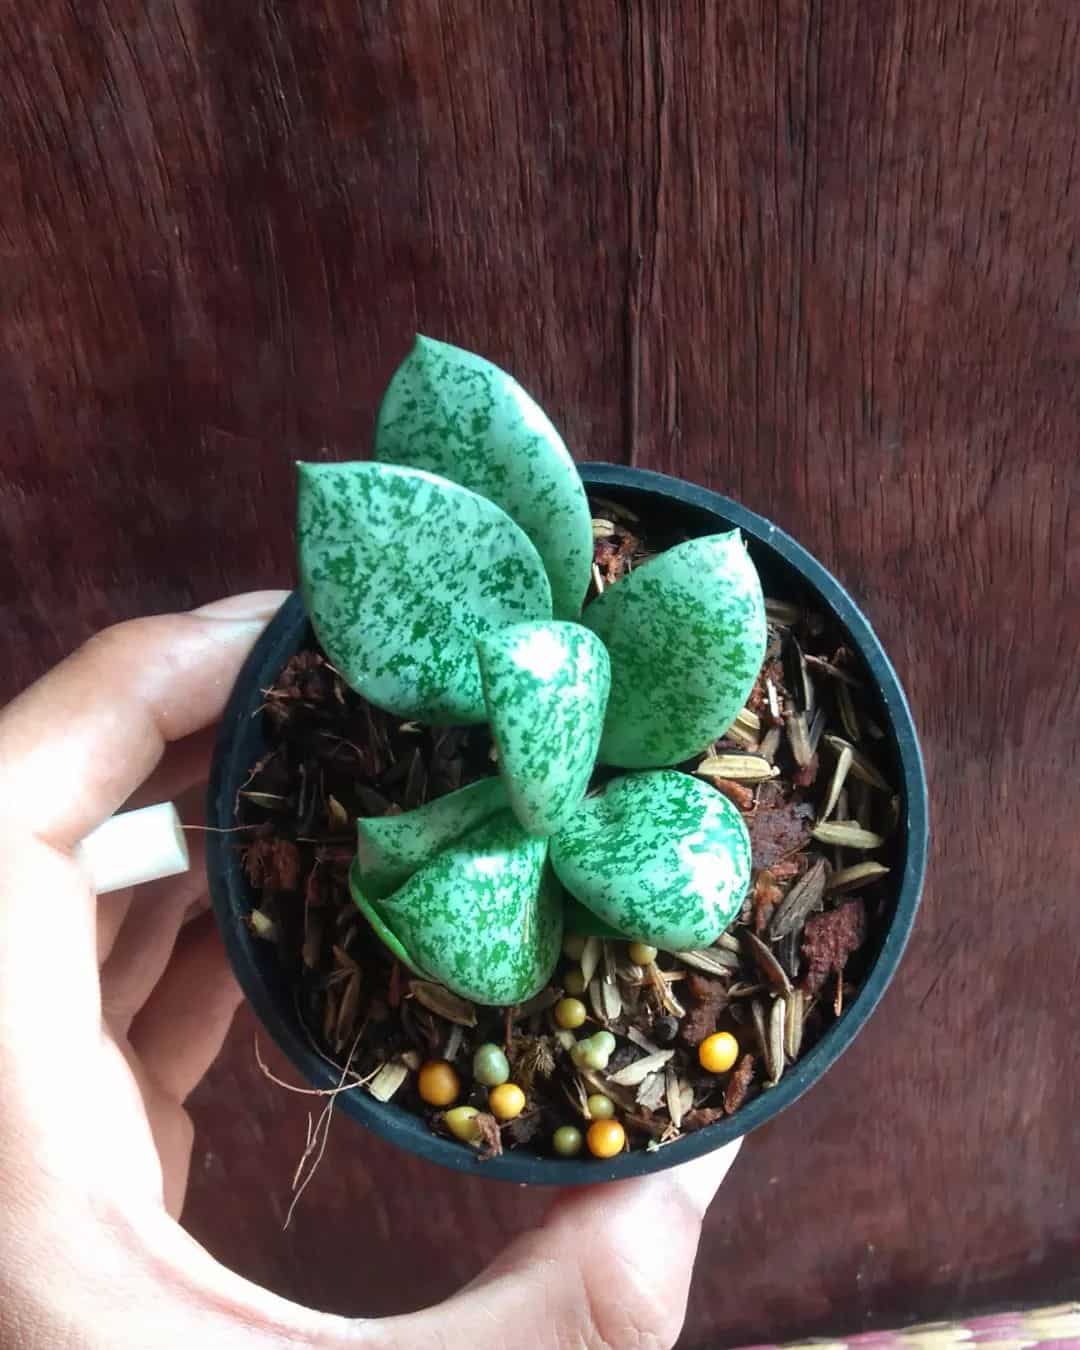 Hoya Lacunosa transplanted in a pot